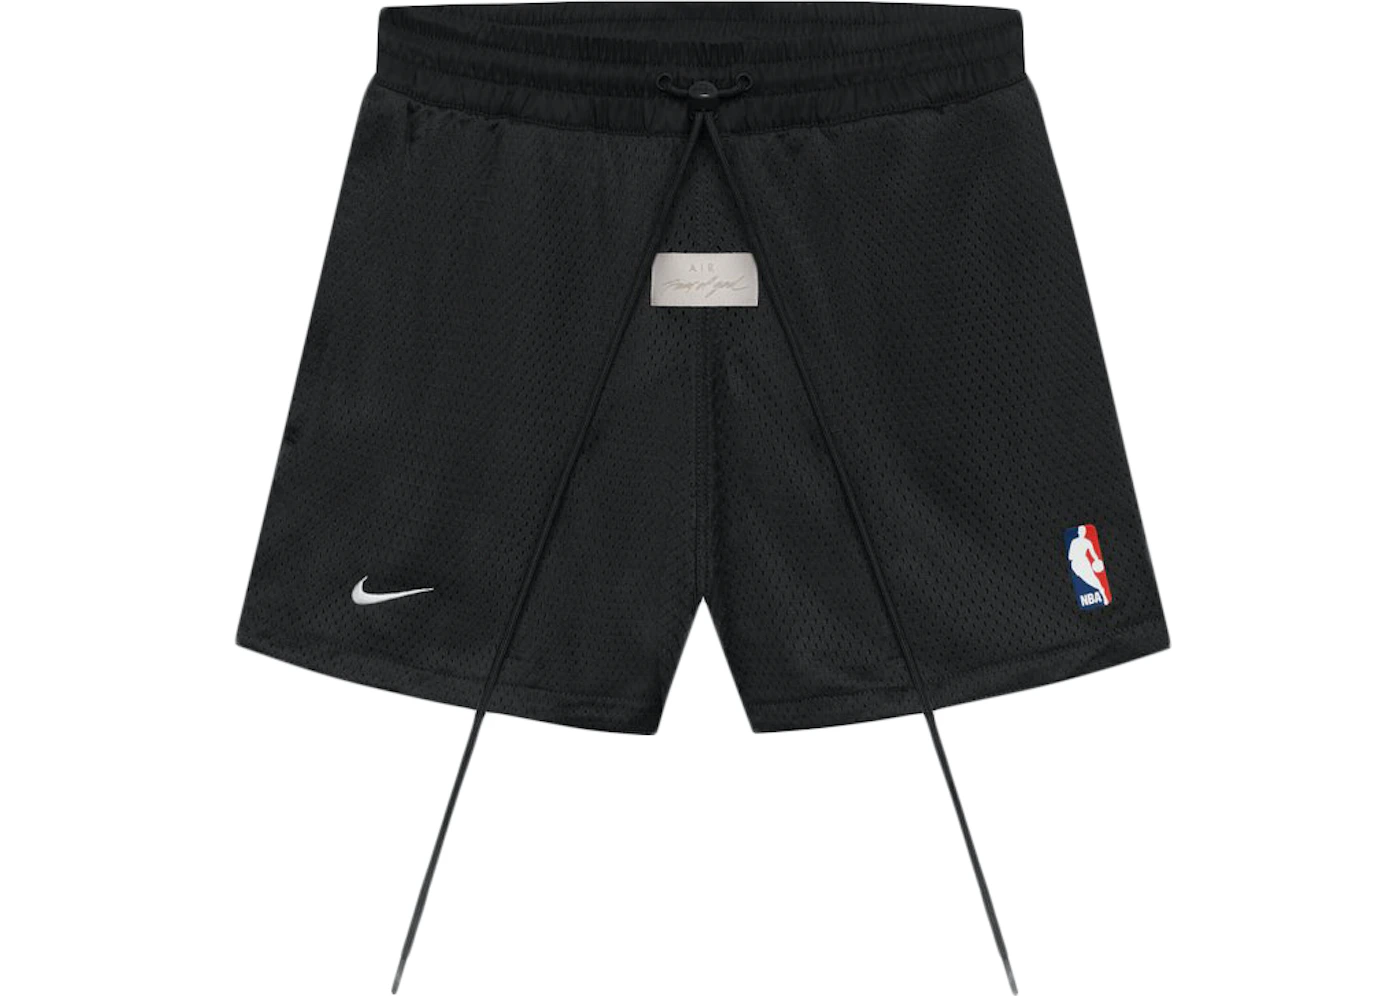 Size 8 NBA Pants for sale